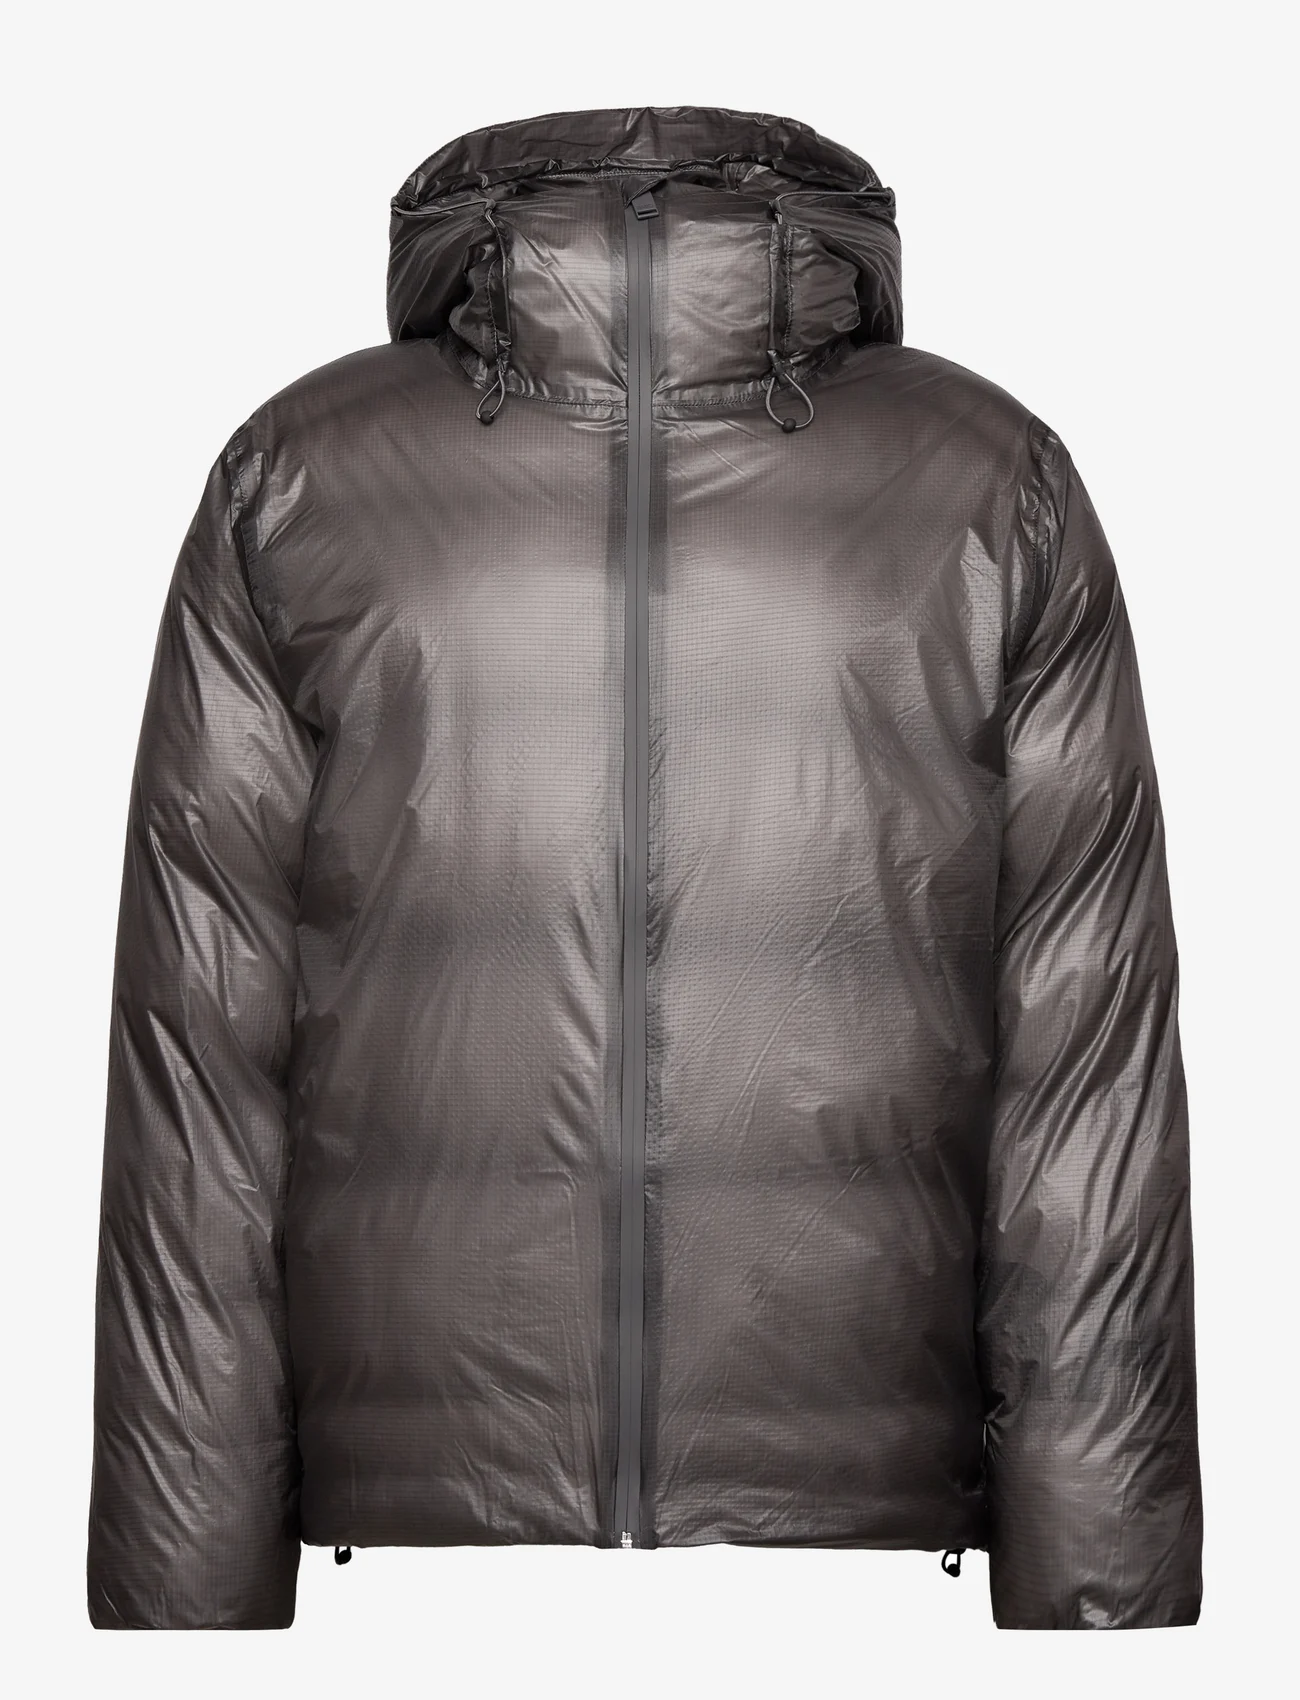 Rains - Kevo Puffer Jacket W4T3 - winter jackets - grey - 0